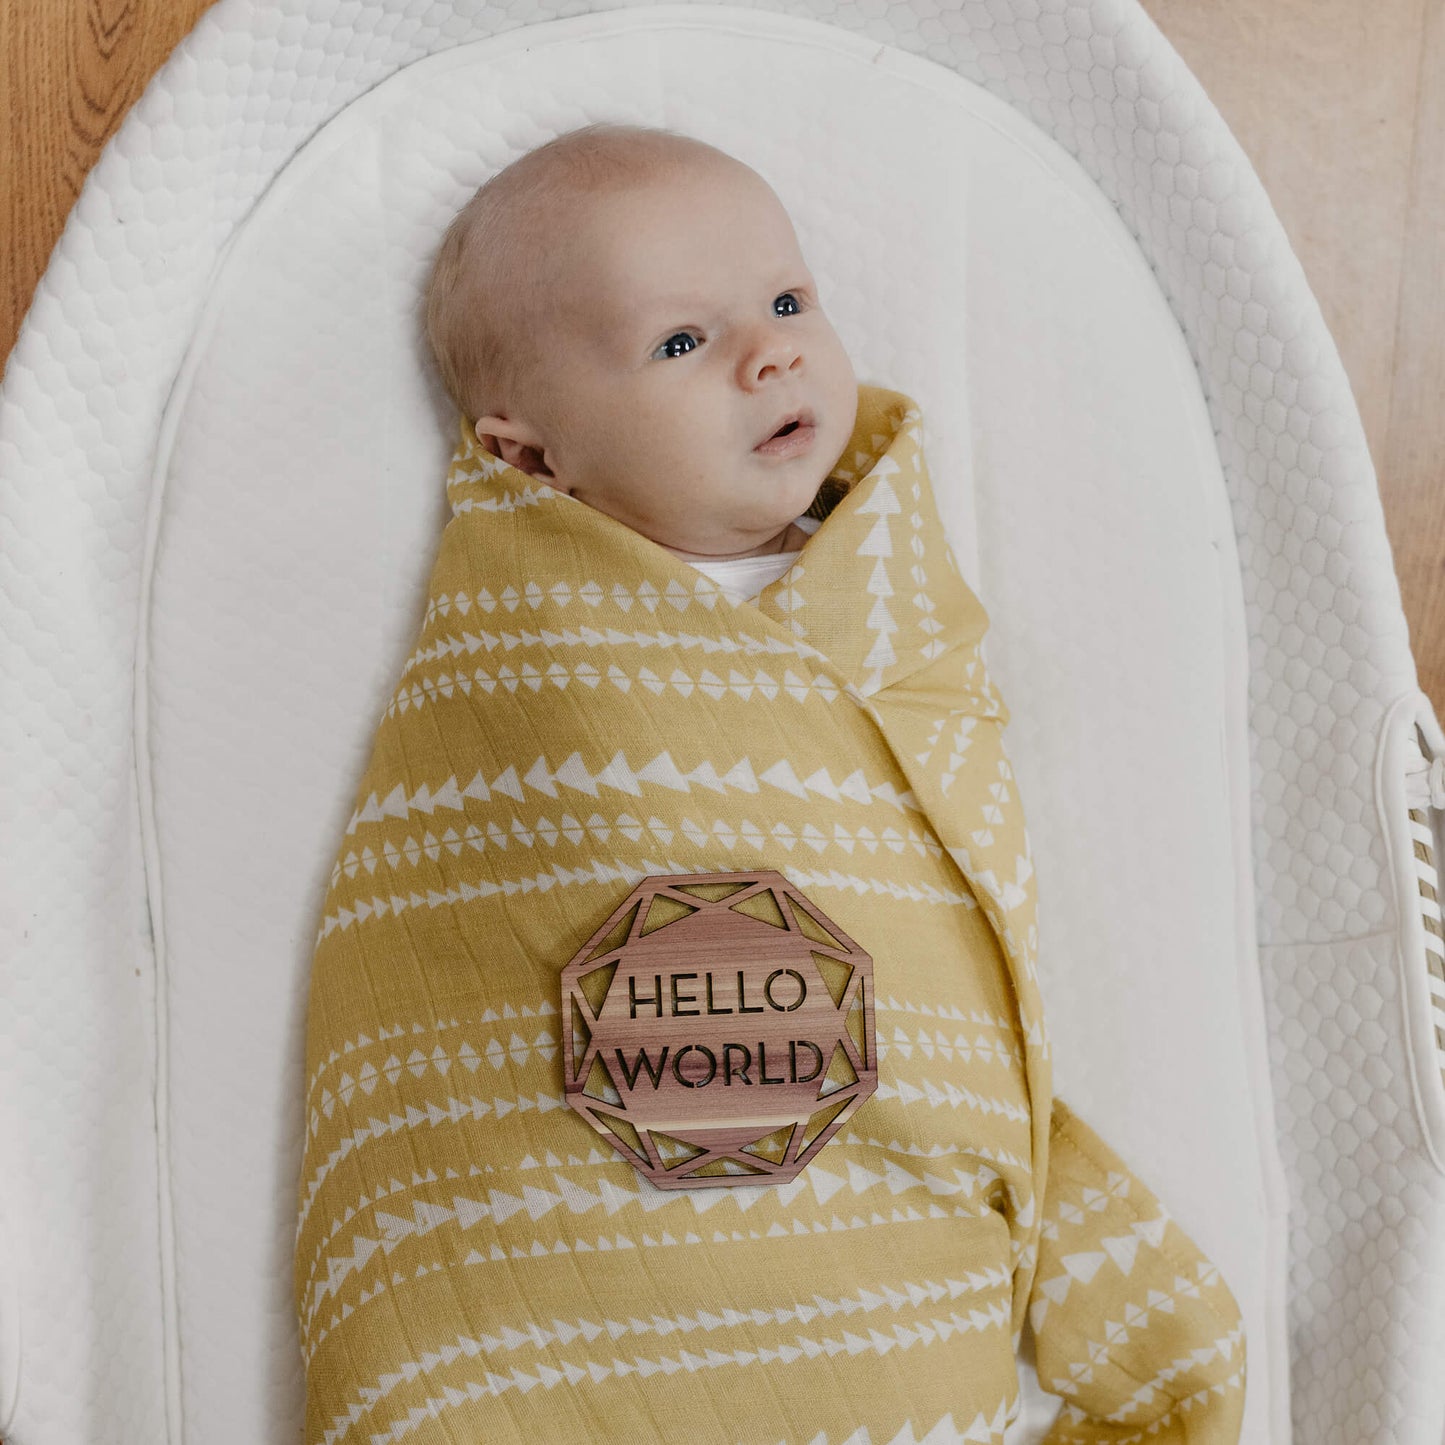 Newborn Announcement Sign - Hello World - LeeMo Designs